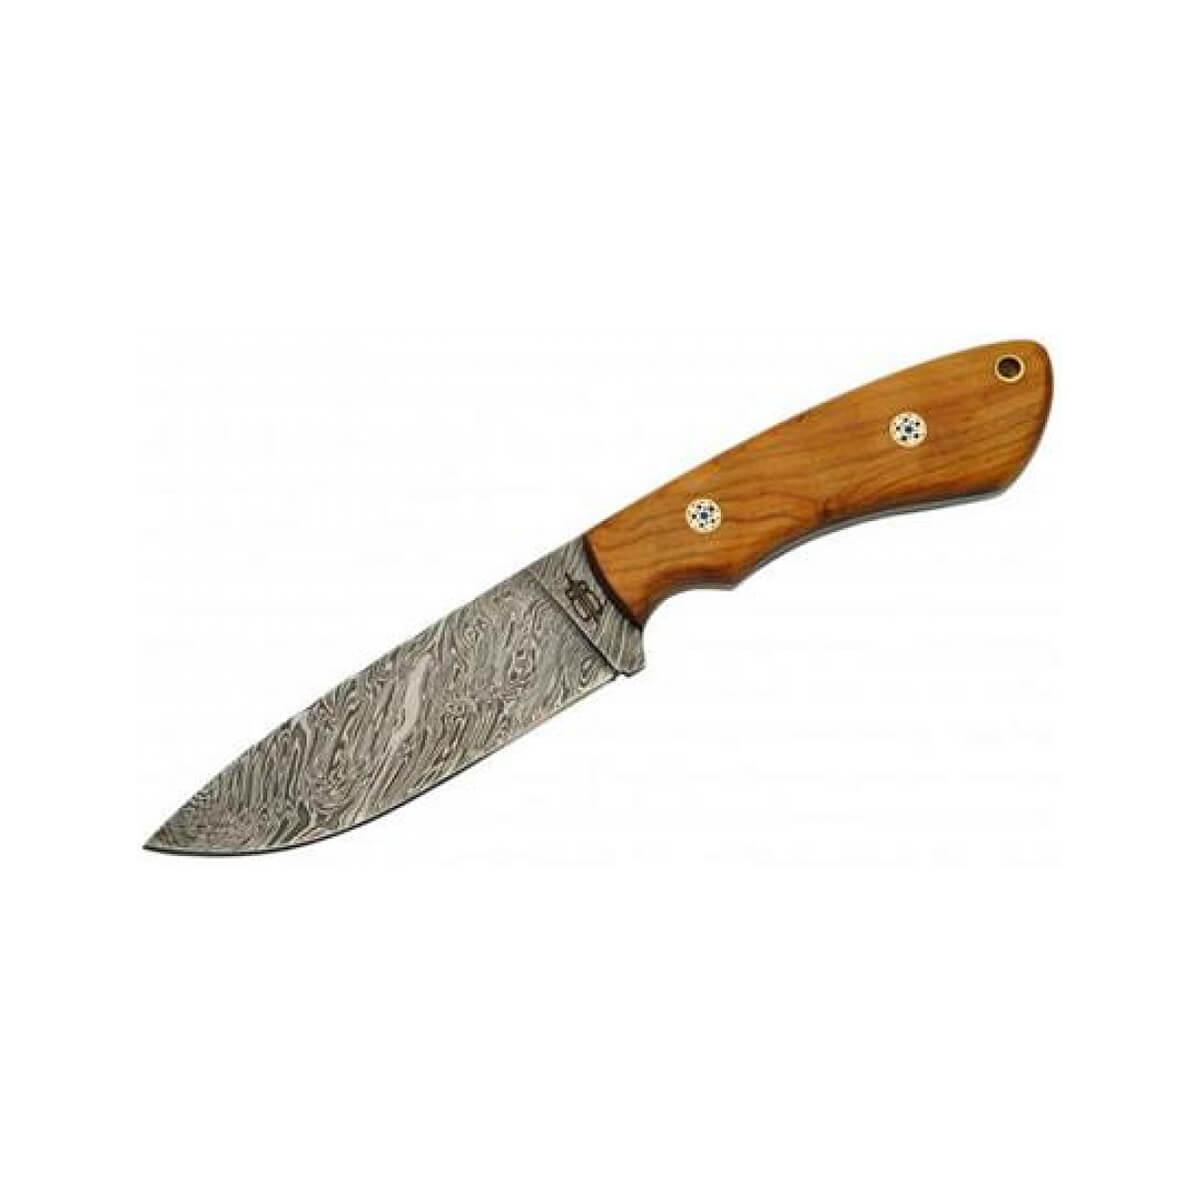  Texas Hunter Knife